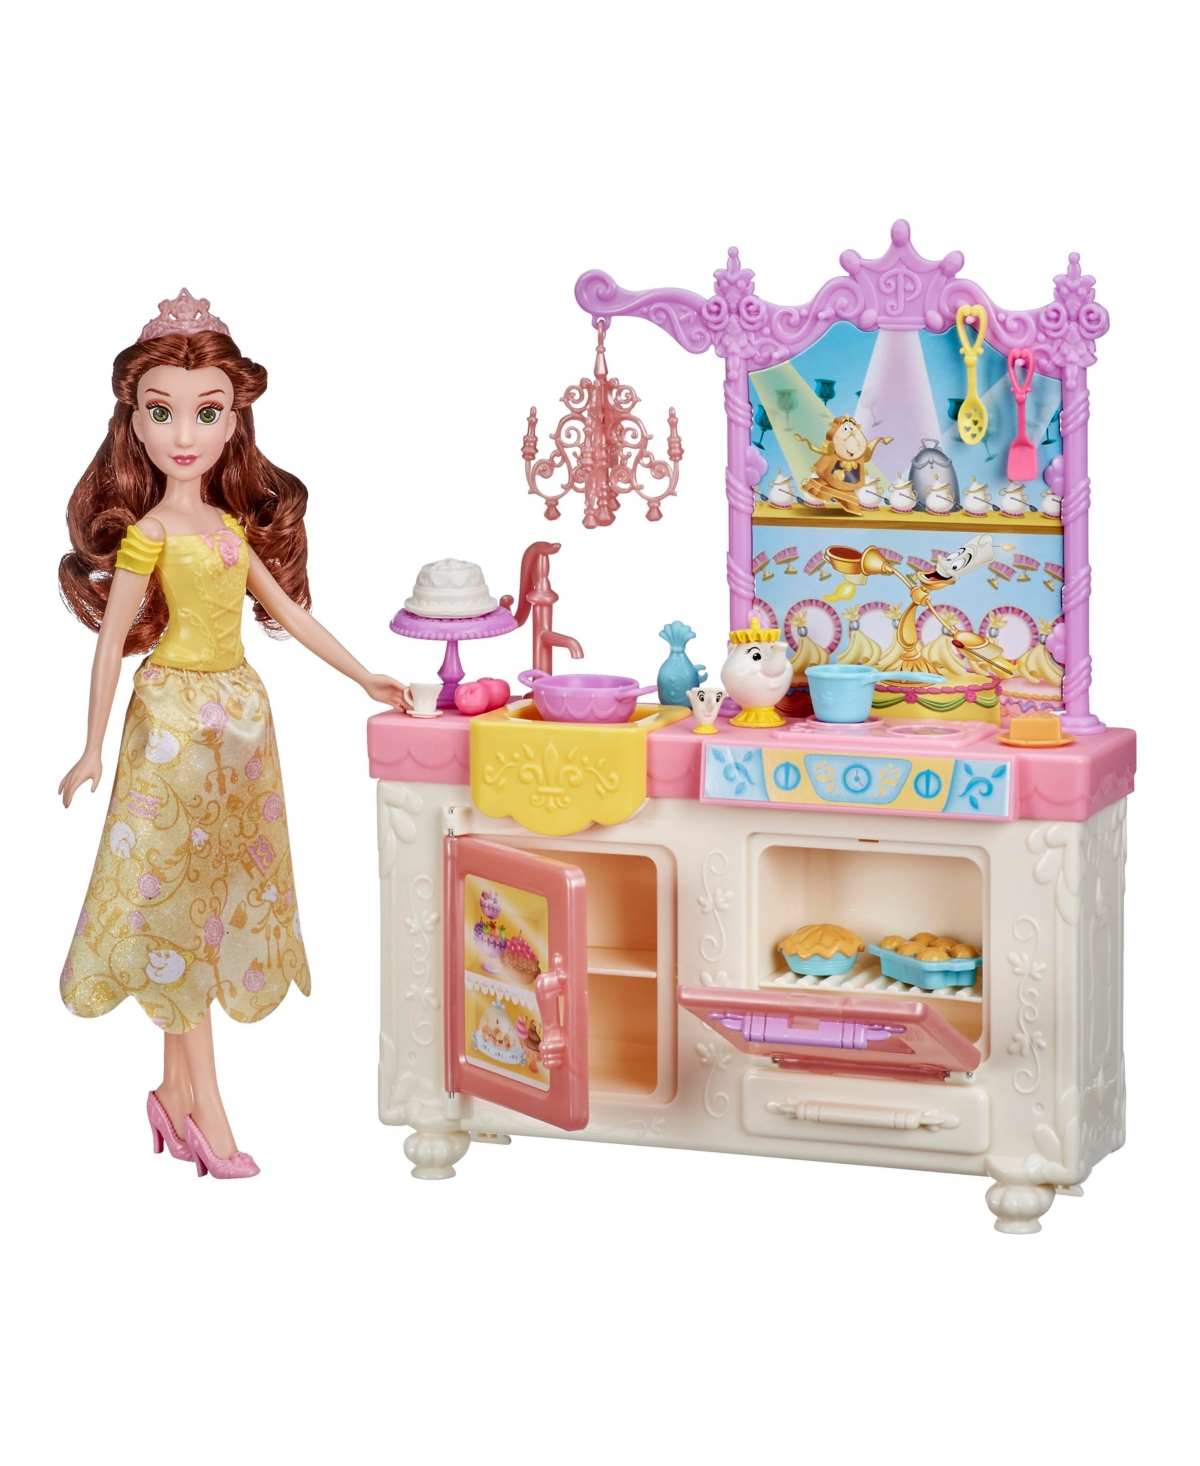 EAN 5010993719914 product image for Disney Princesses Belles Royal Kitchen | upcitemdb.com